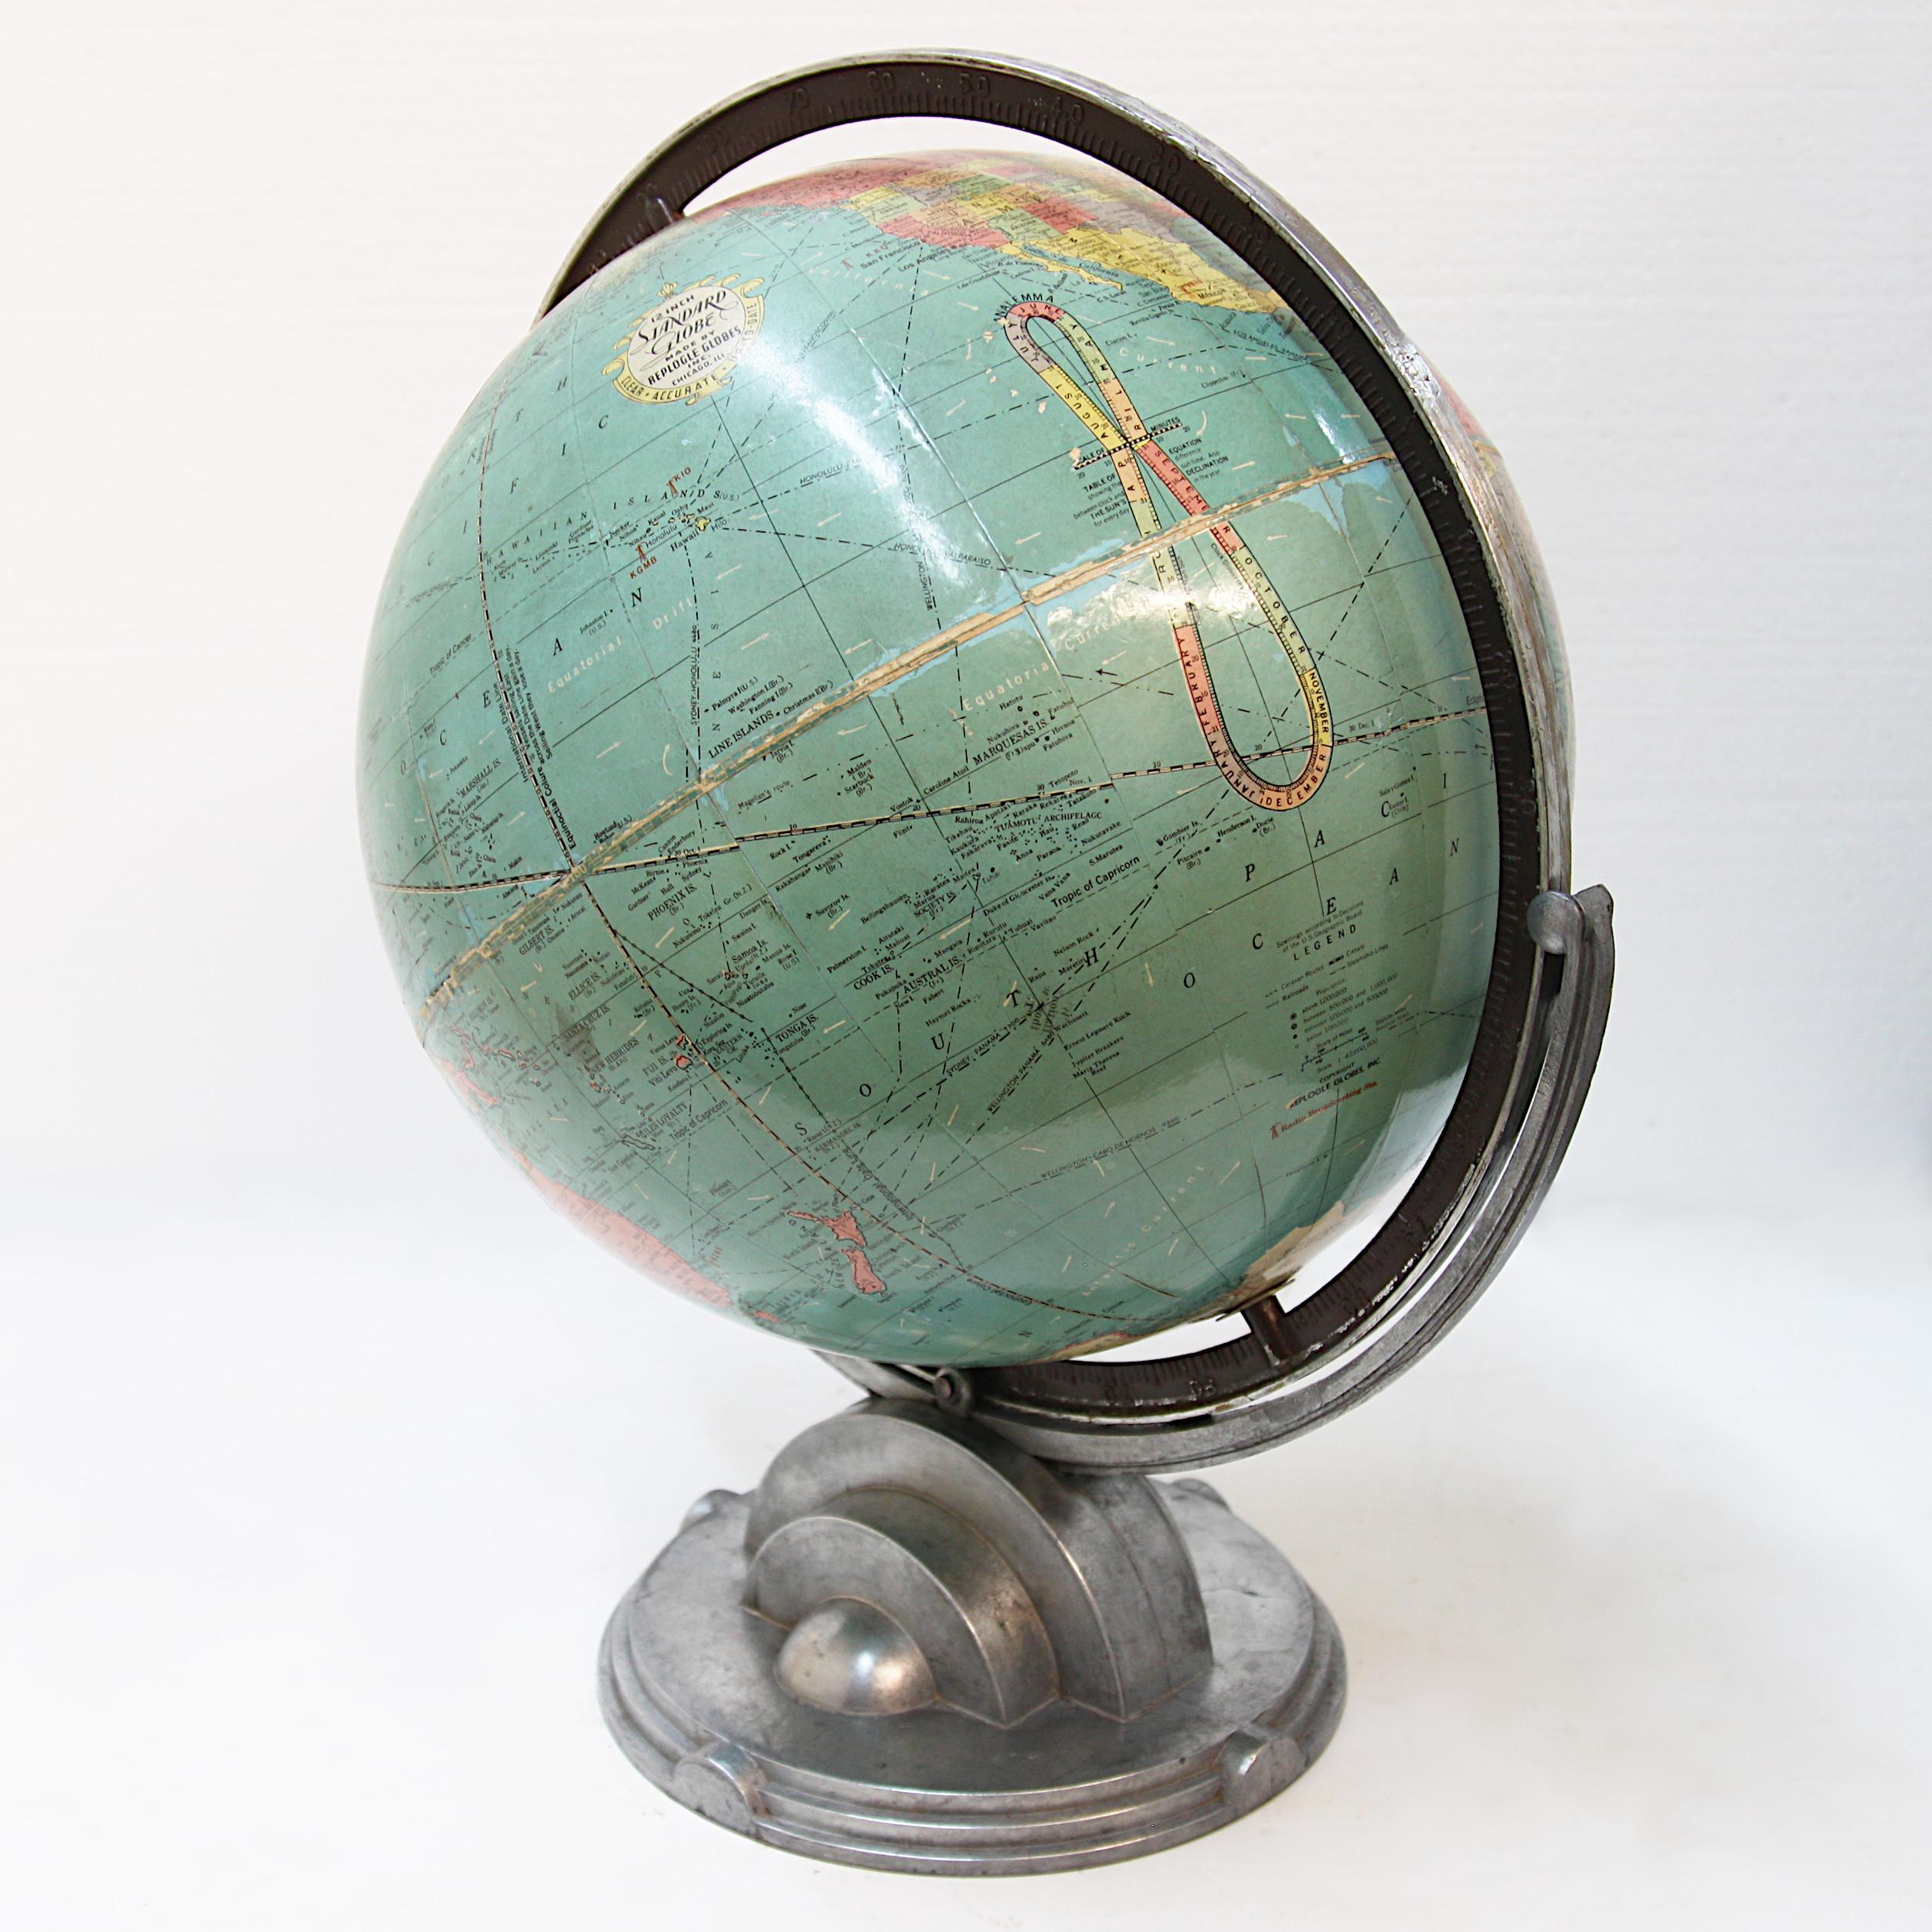 Wonderful Art Deco/ streamline Moderne desk globe by Replogle Globes Inc of Chicago, Illinois. Globe features 12